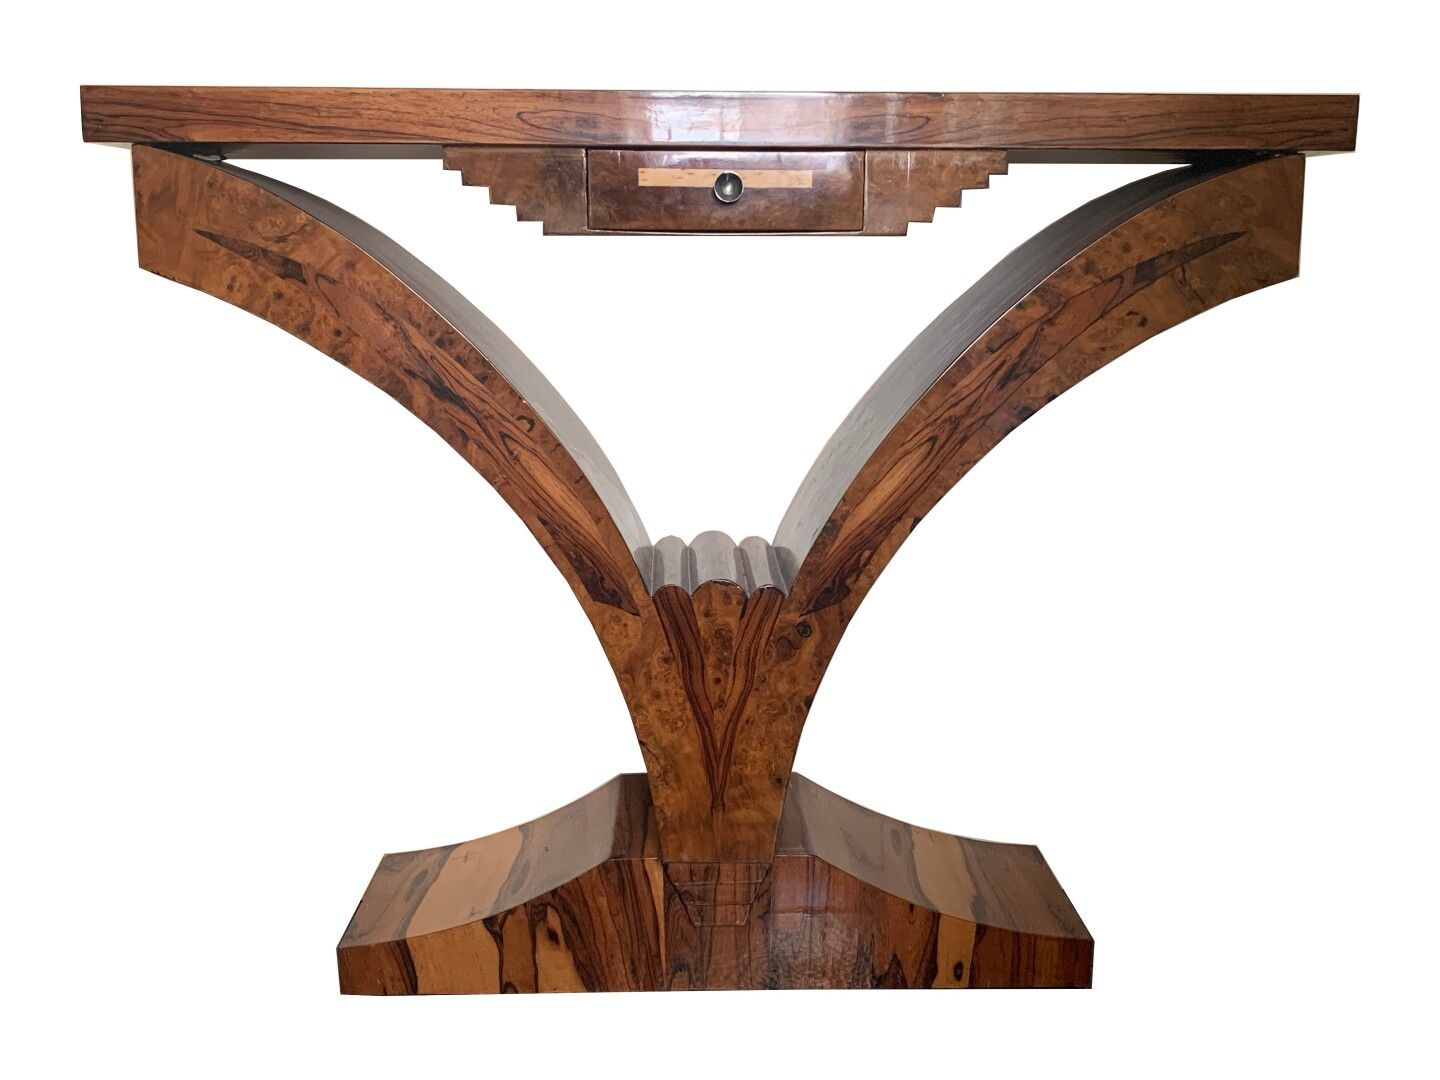 Null 20世纪--艺术装饰风格

装饰艺术风格的控制台，用不同种类的木材和木皮制成，在腰部开有一个倒台阶形式的抽屉，扇形的立柱放在一个大底座上

尺寸：12&hellip;